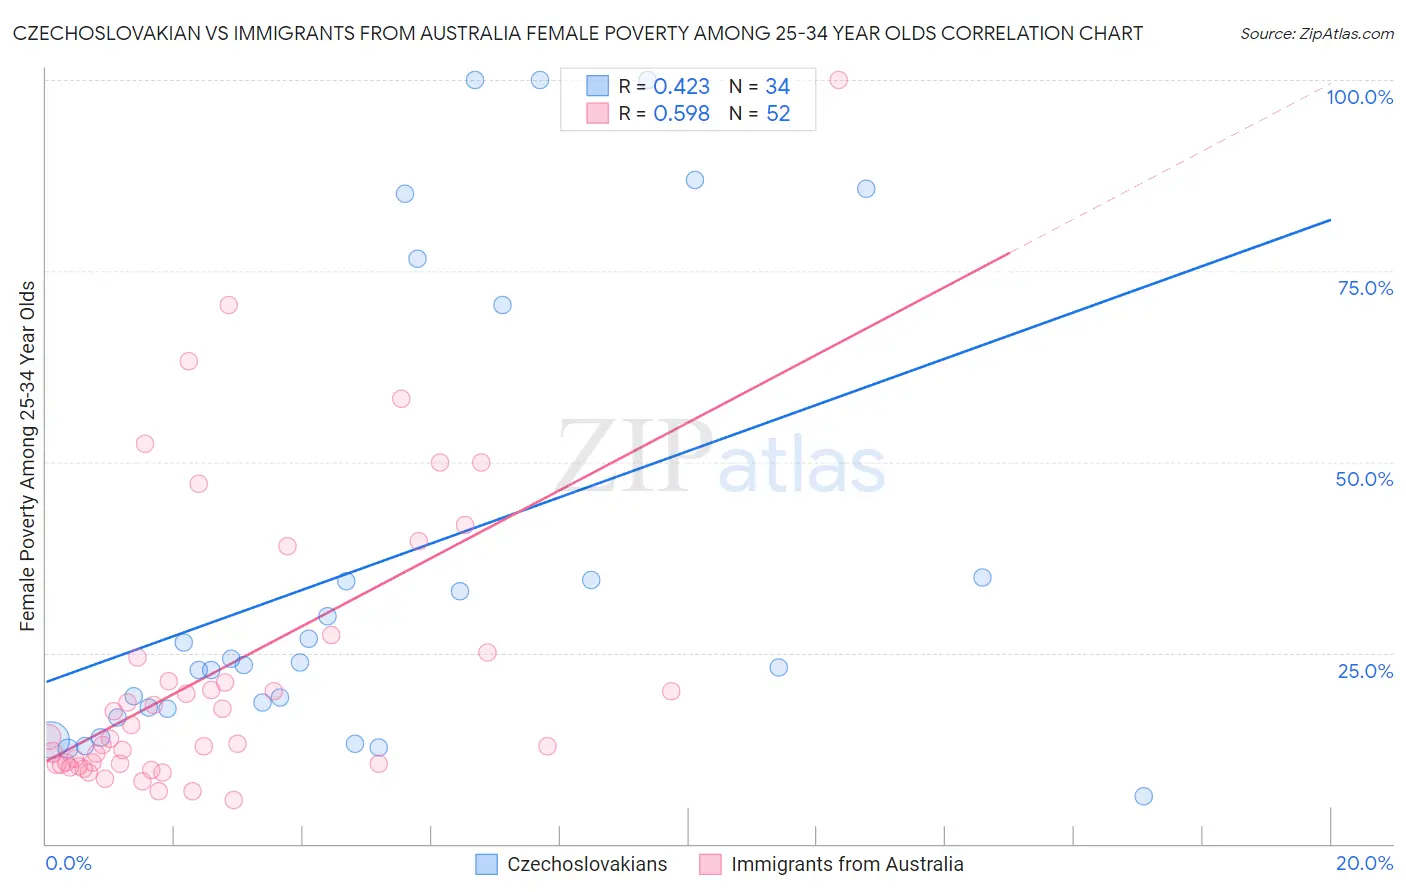 Czechoslovakian vs Immigrants from Australia Female Poverty Among 25-34 Year Olds